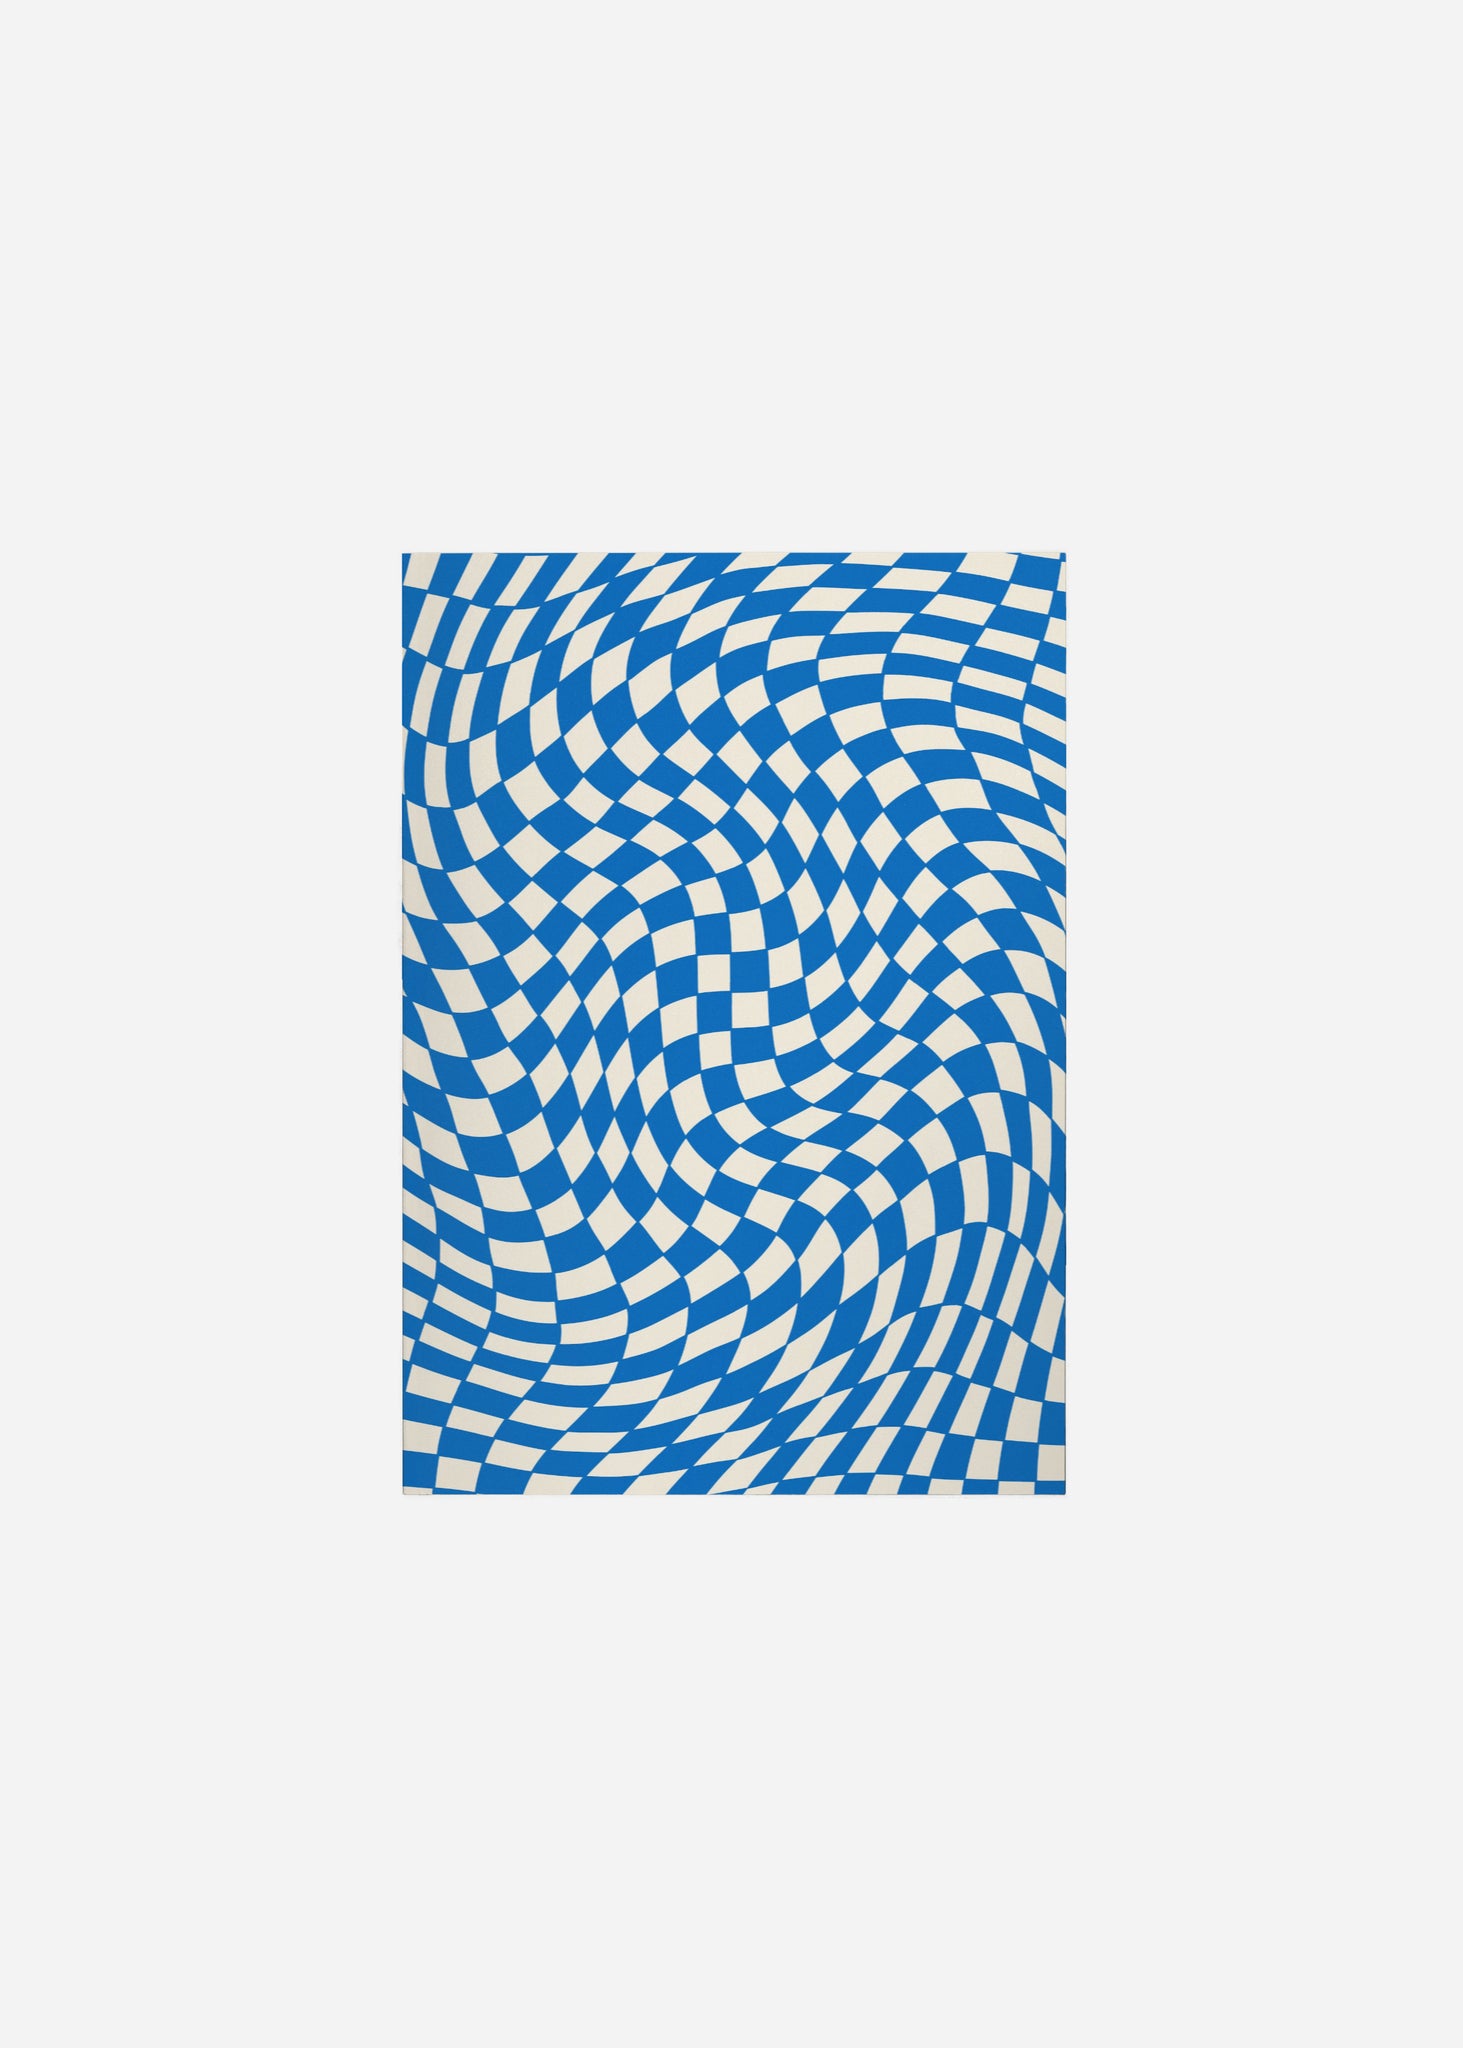 Wavy Checkers Fine Art Print